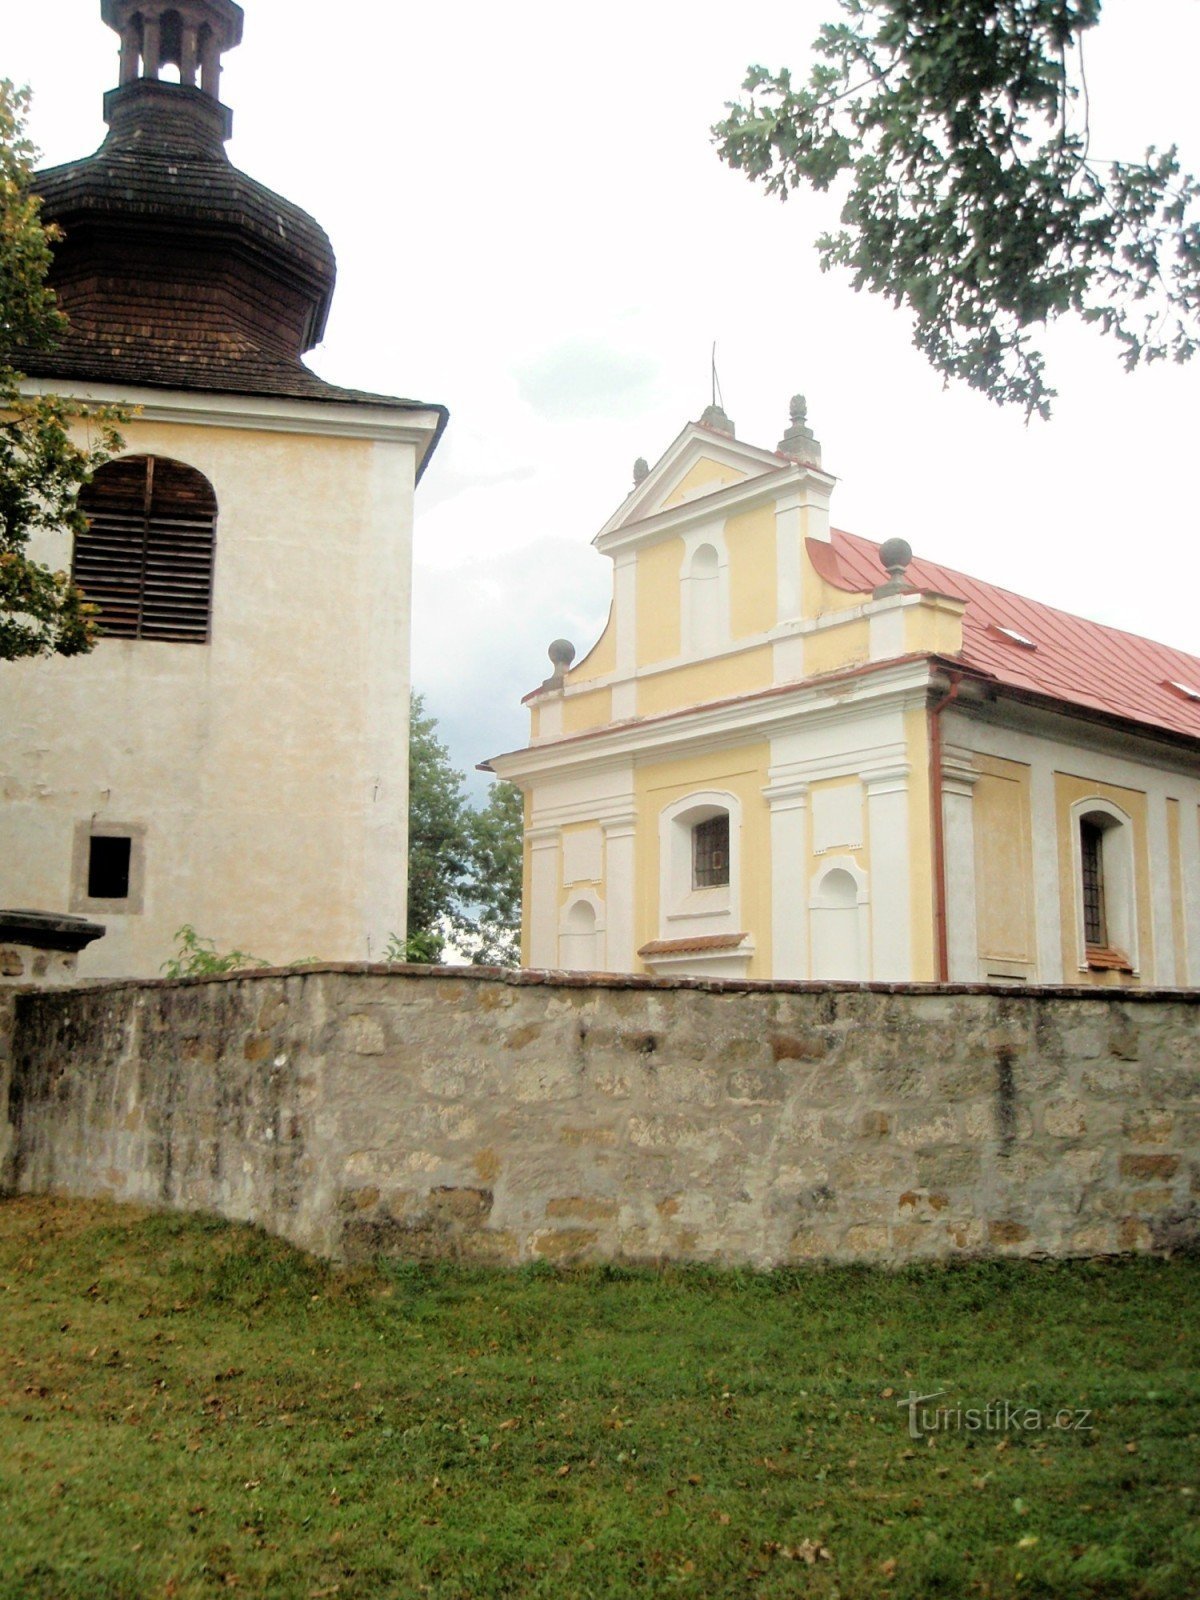 Biserica Sf. Barbory ​​cu clopote